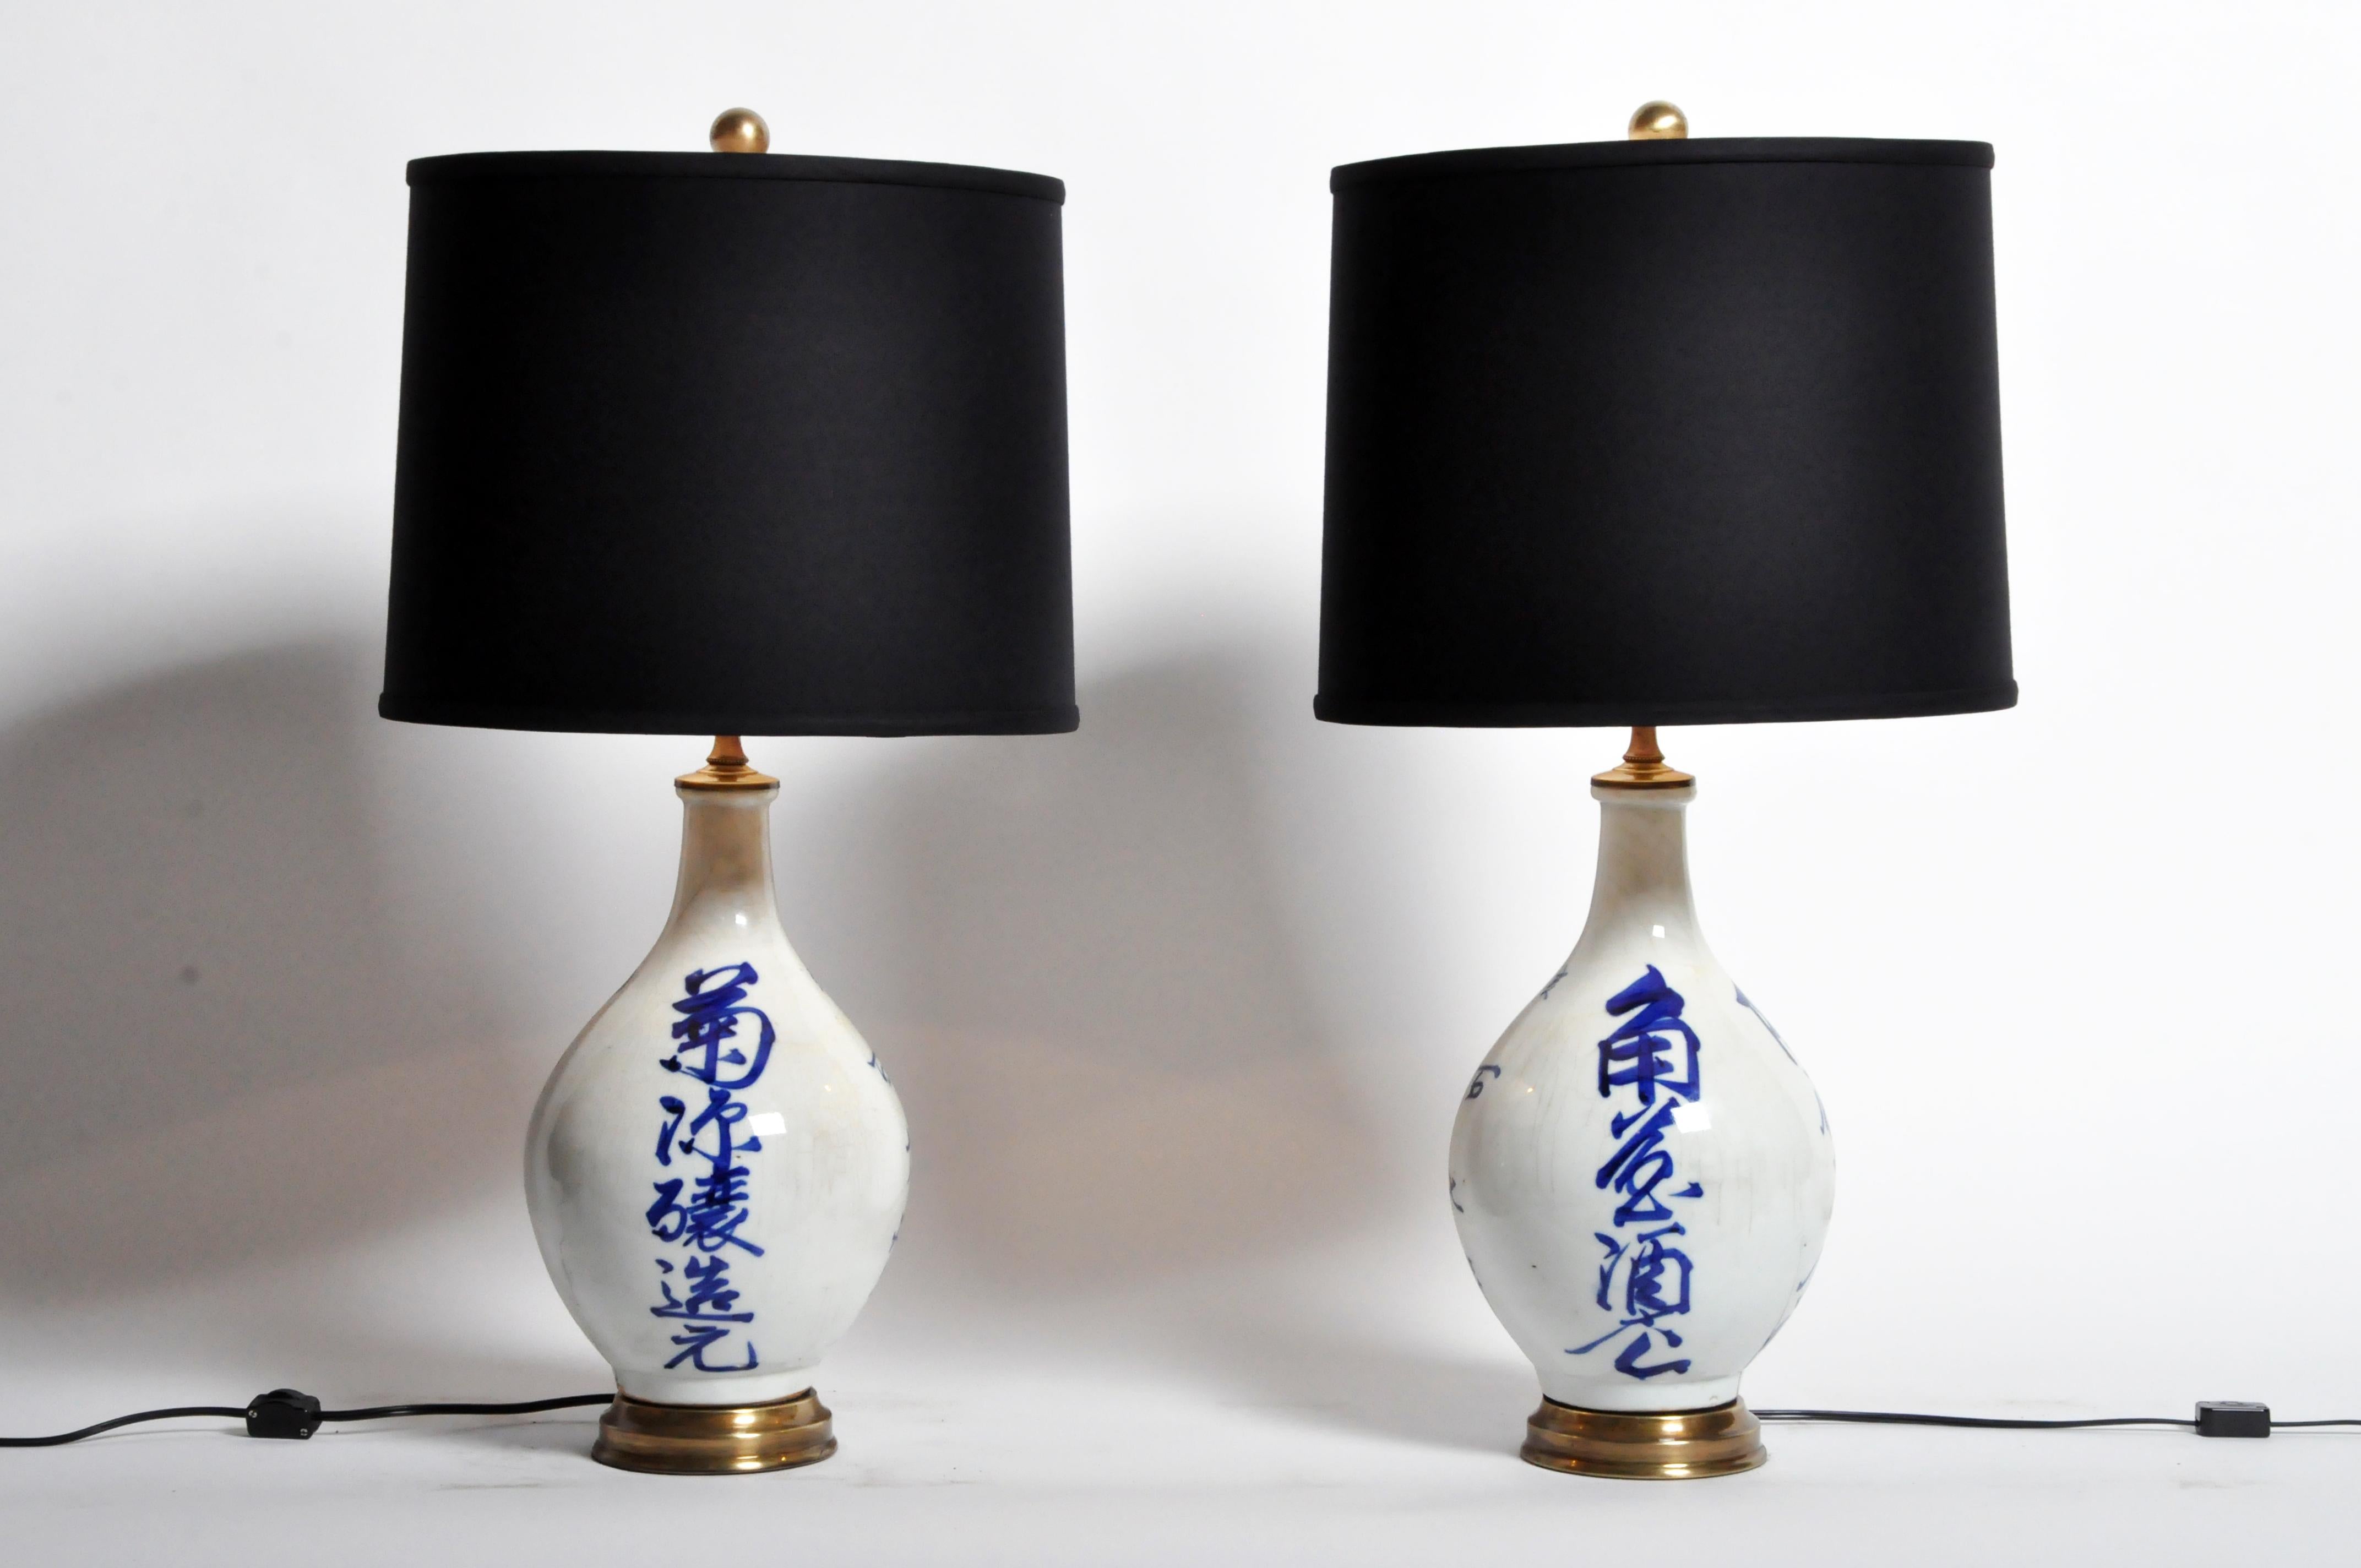 Japanese Sake Bottles Converted to Lamps 14